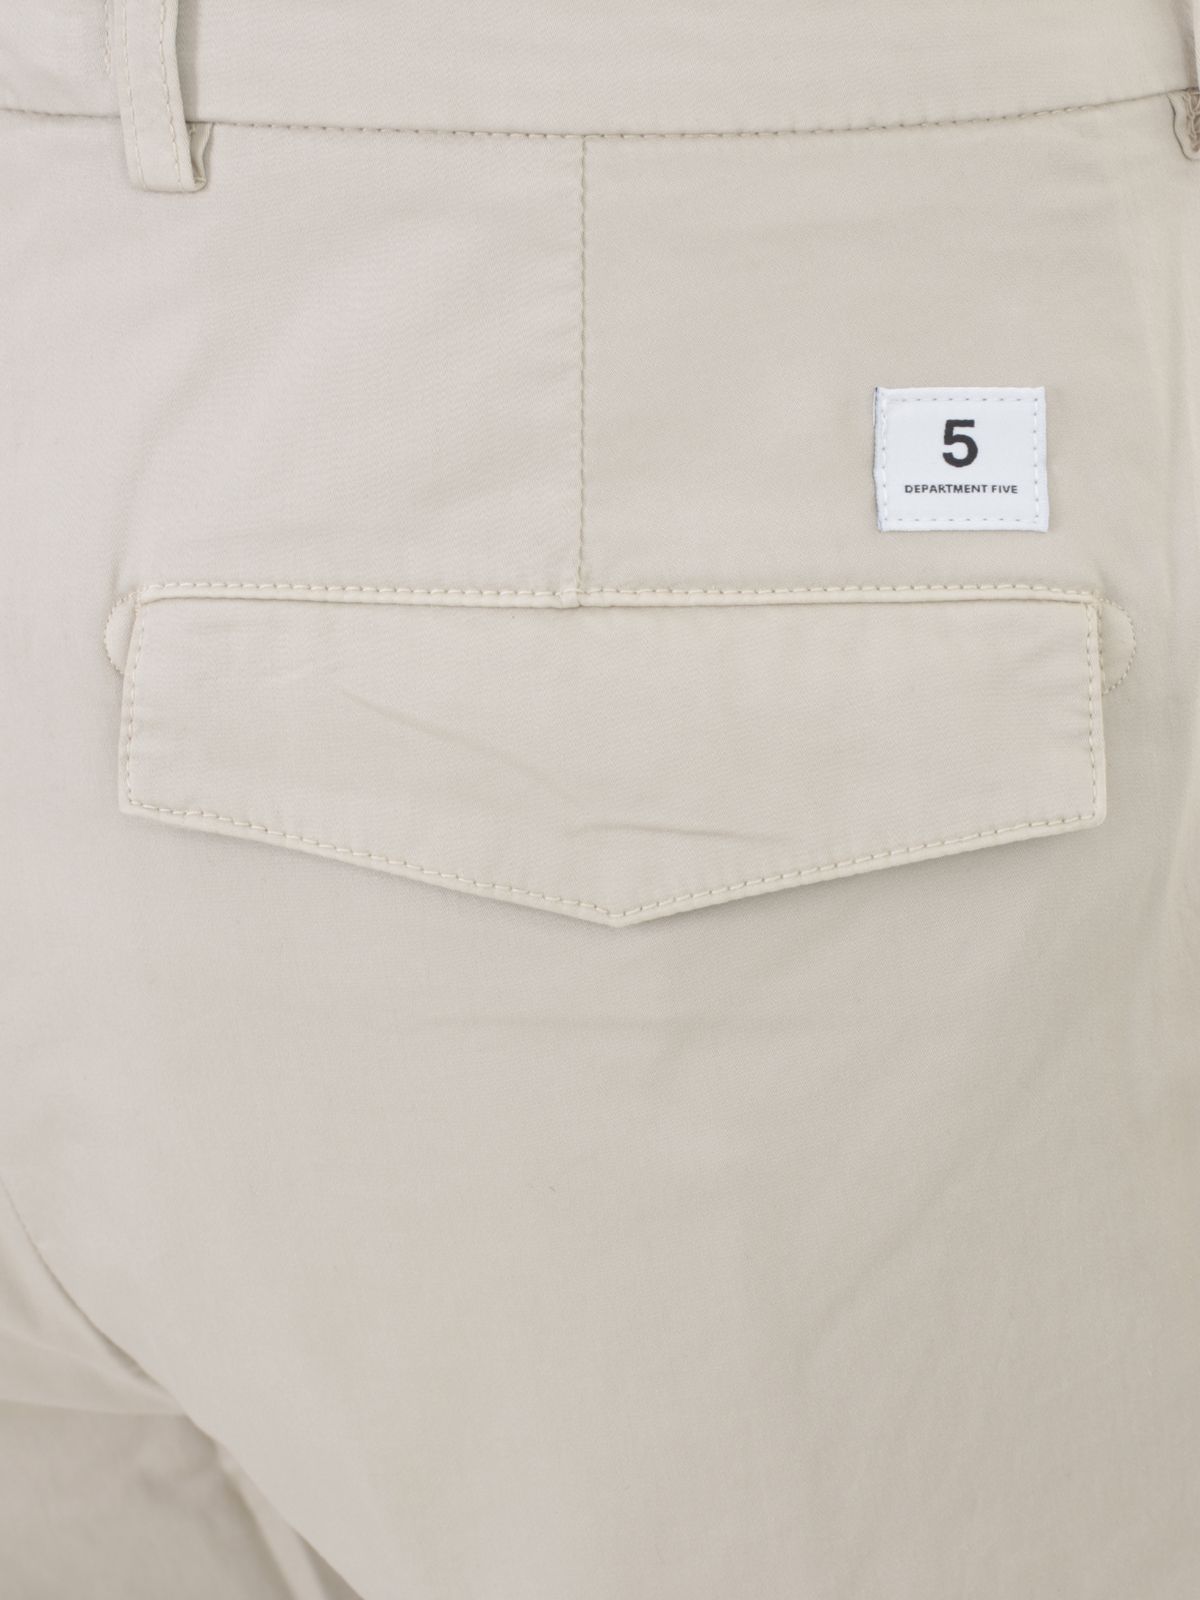 Shop Department Five Grey Regular Pants